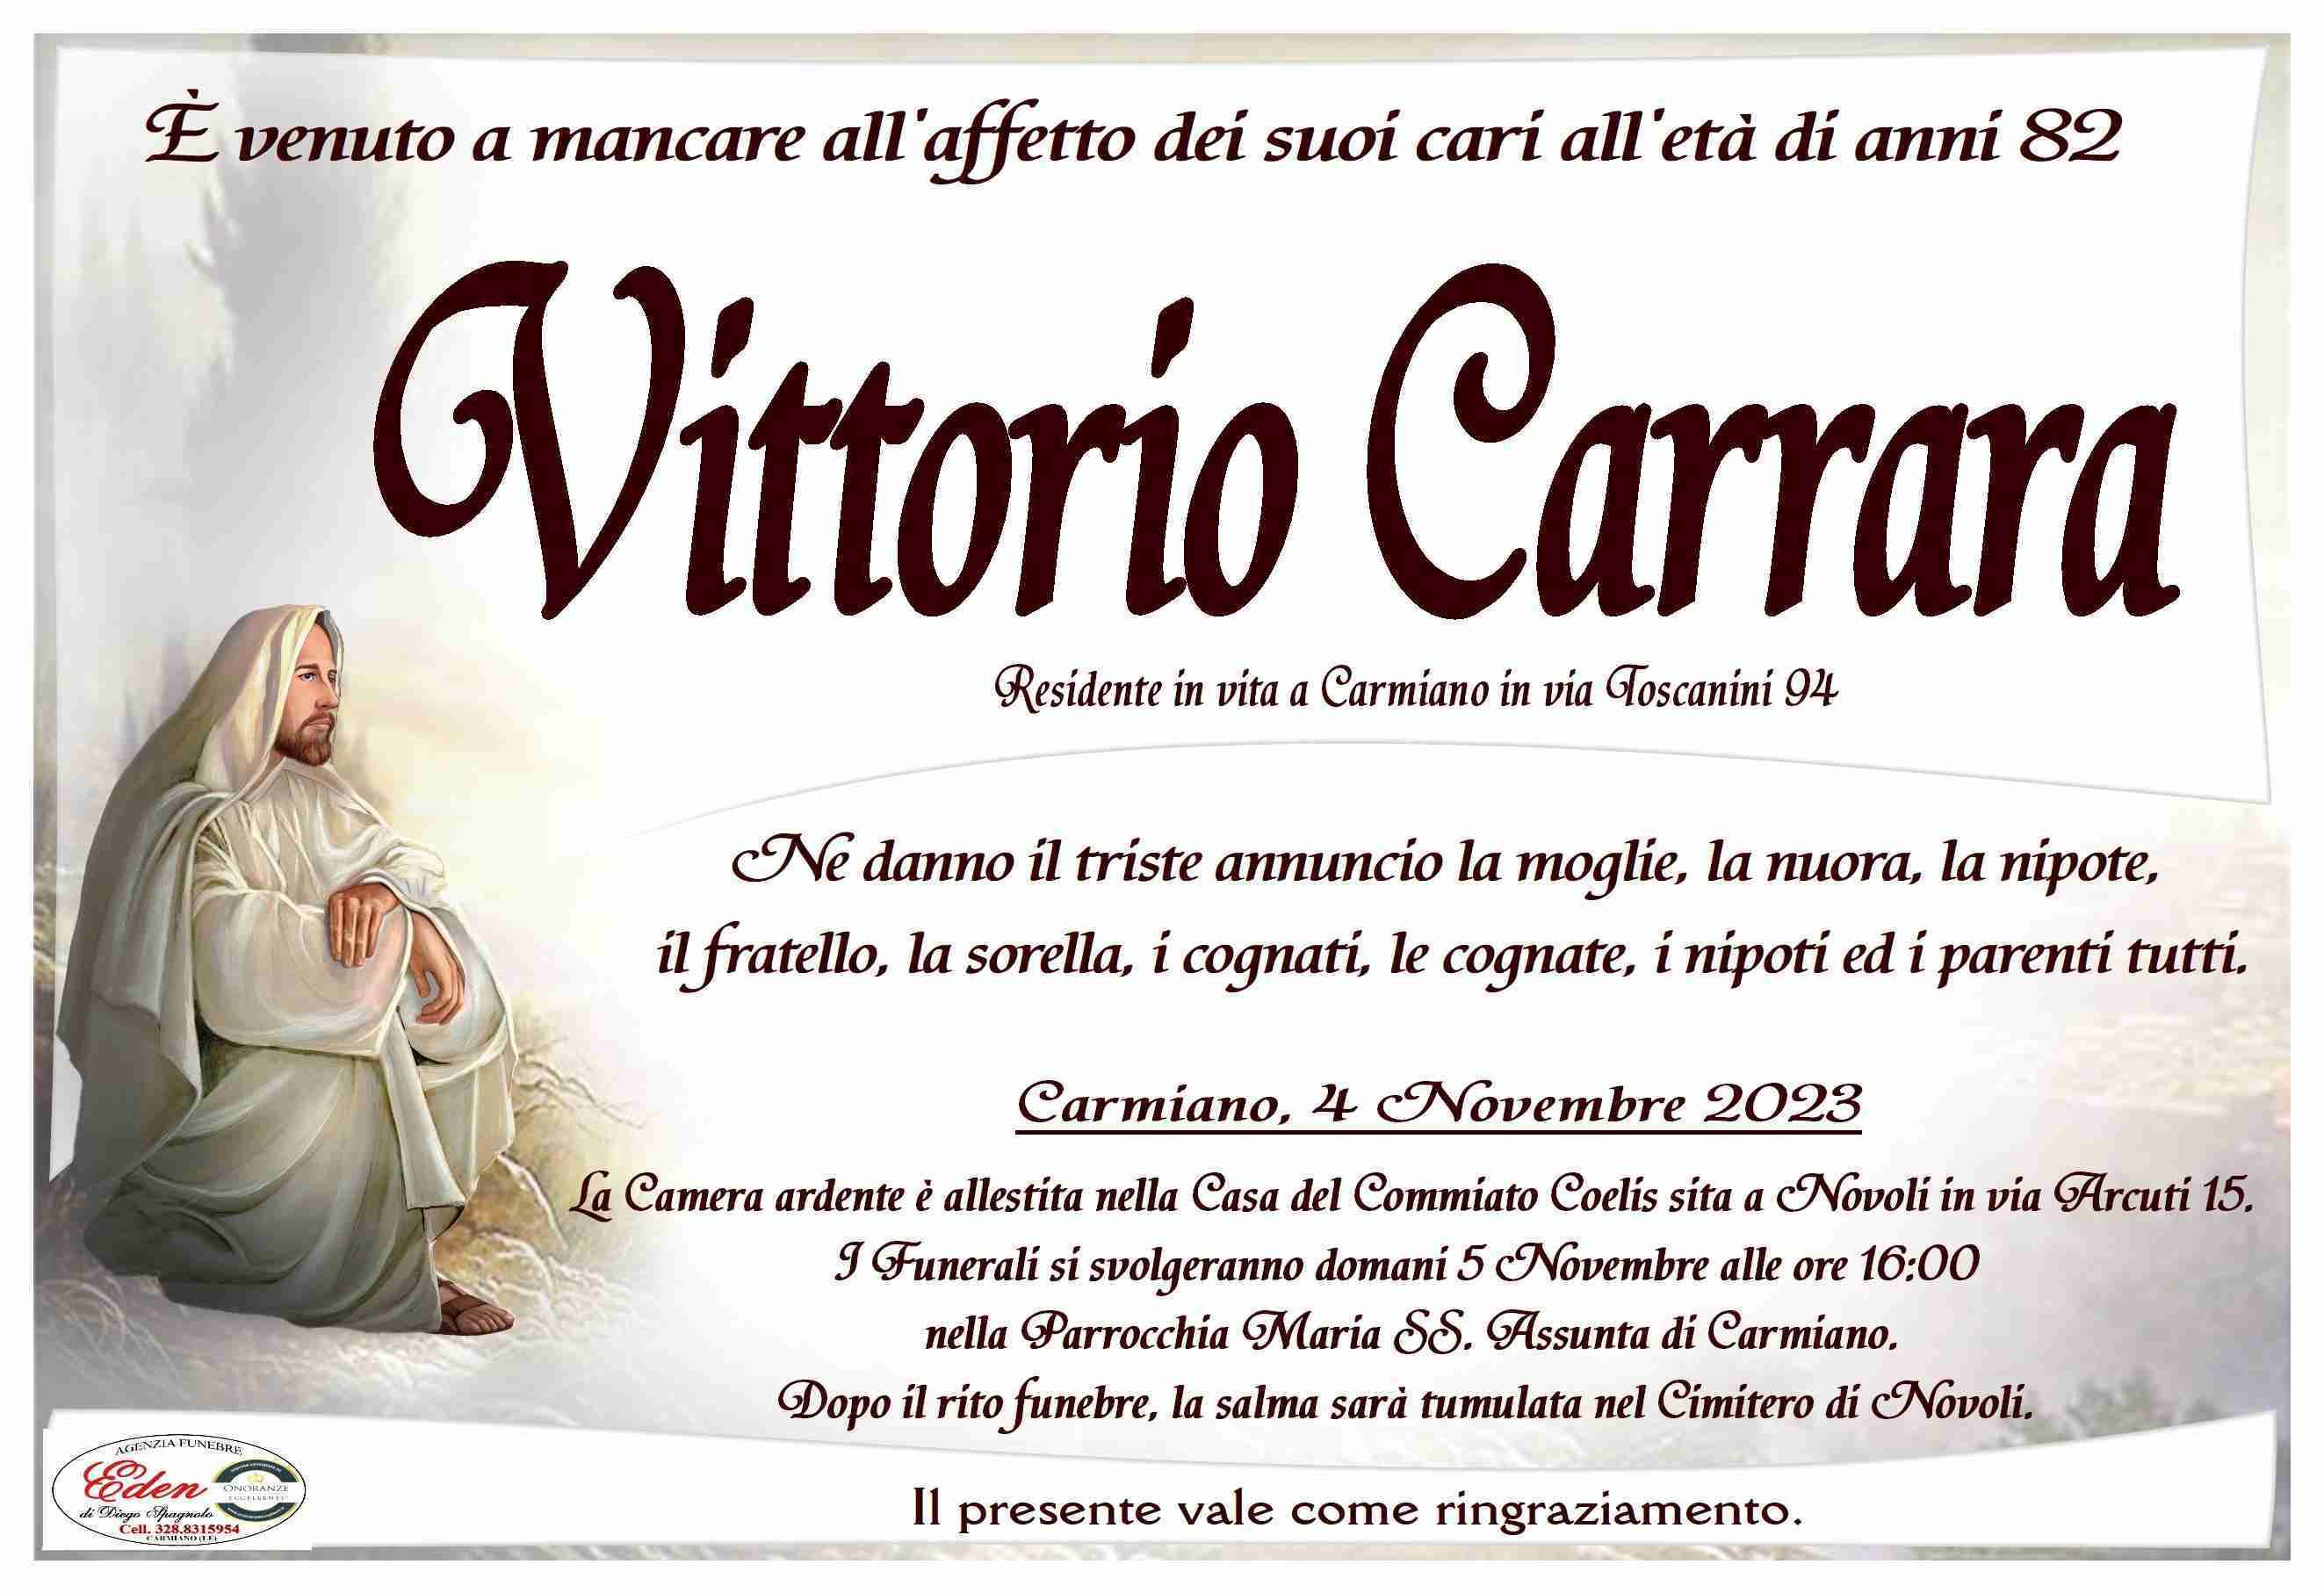 Vittorio Carrara